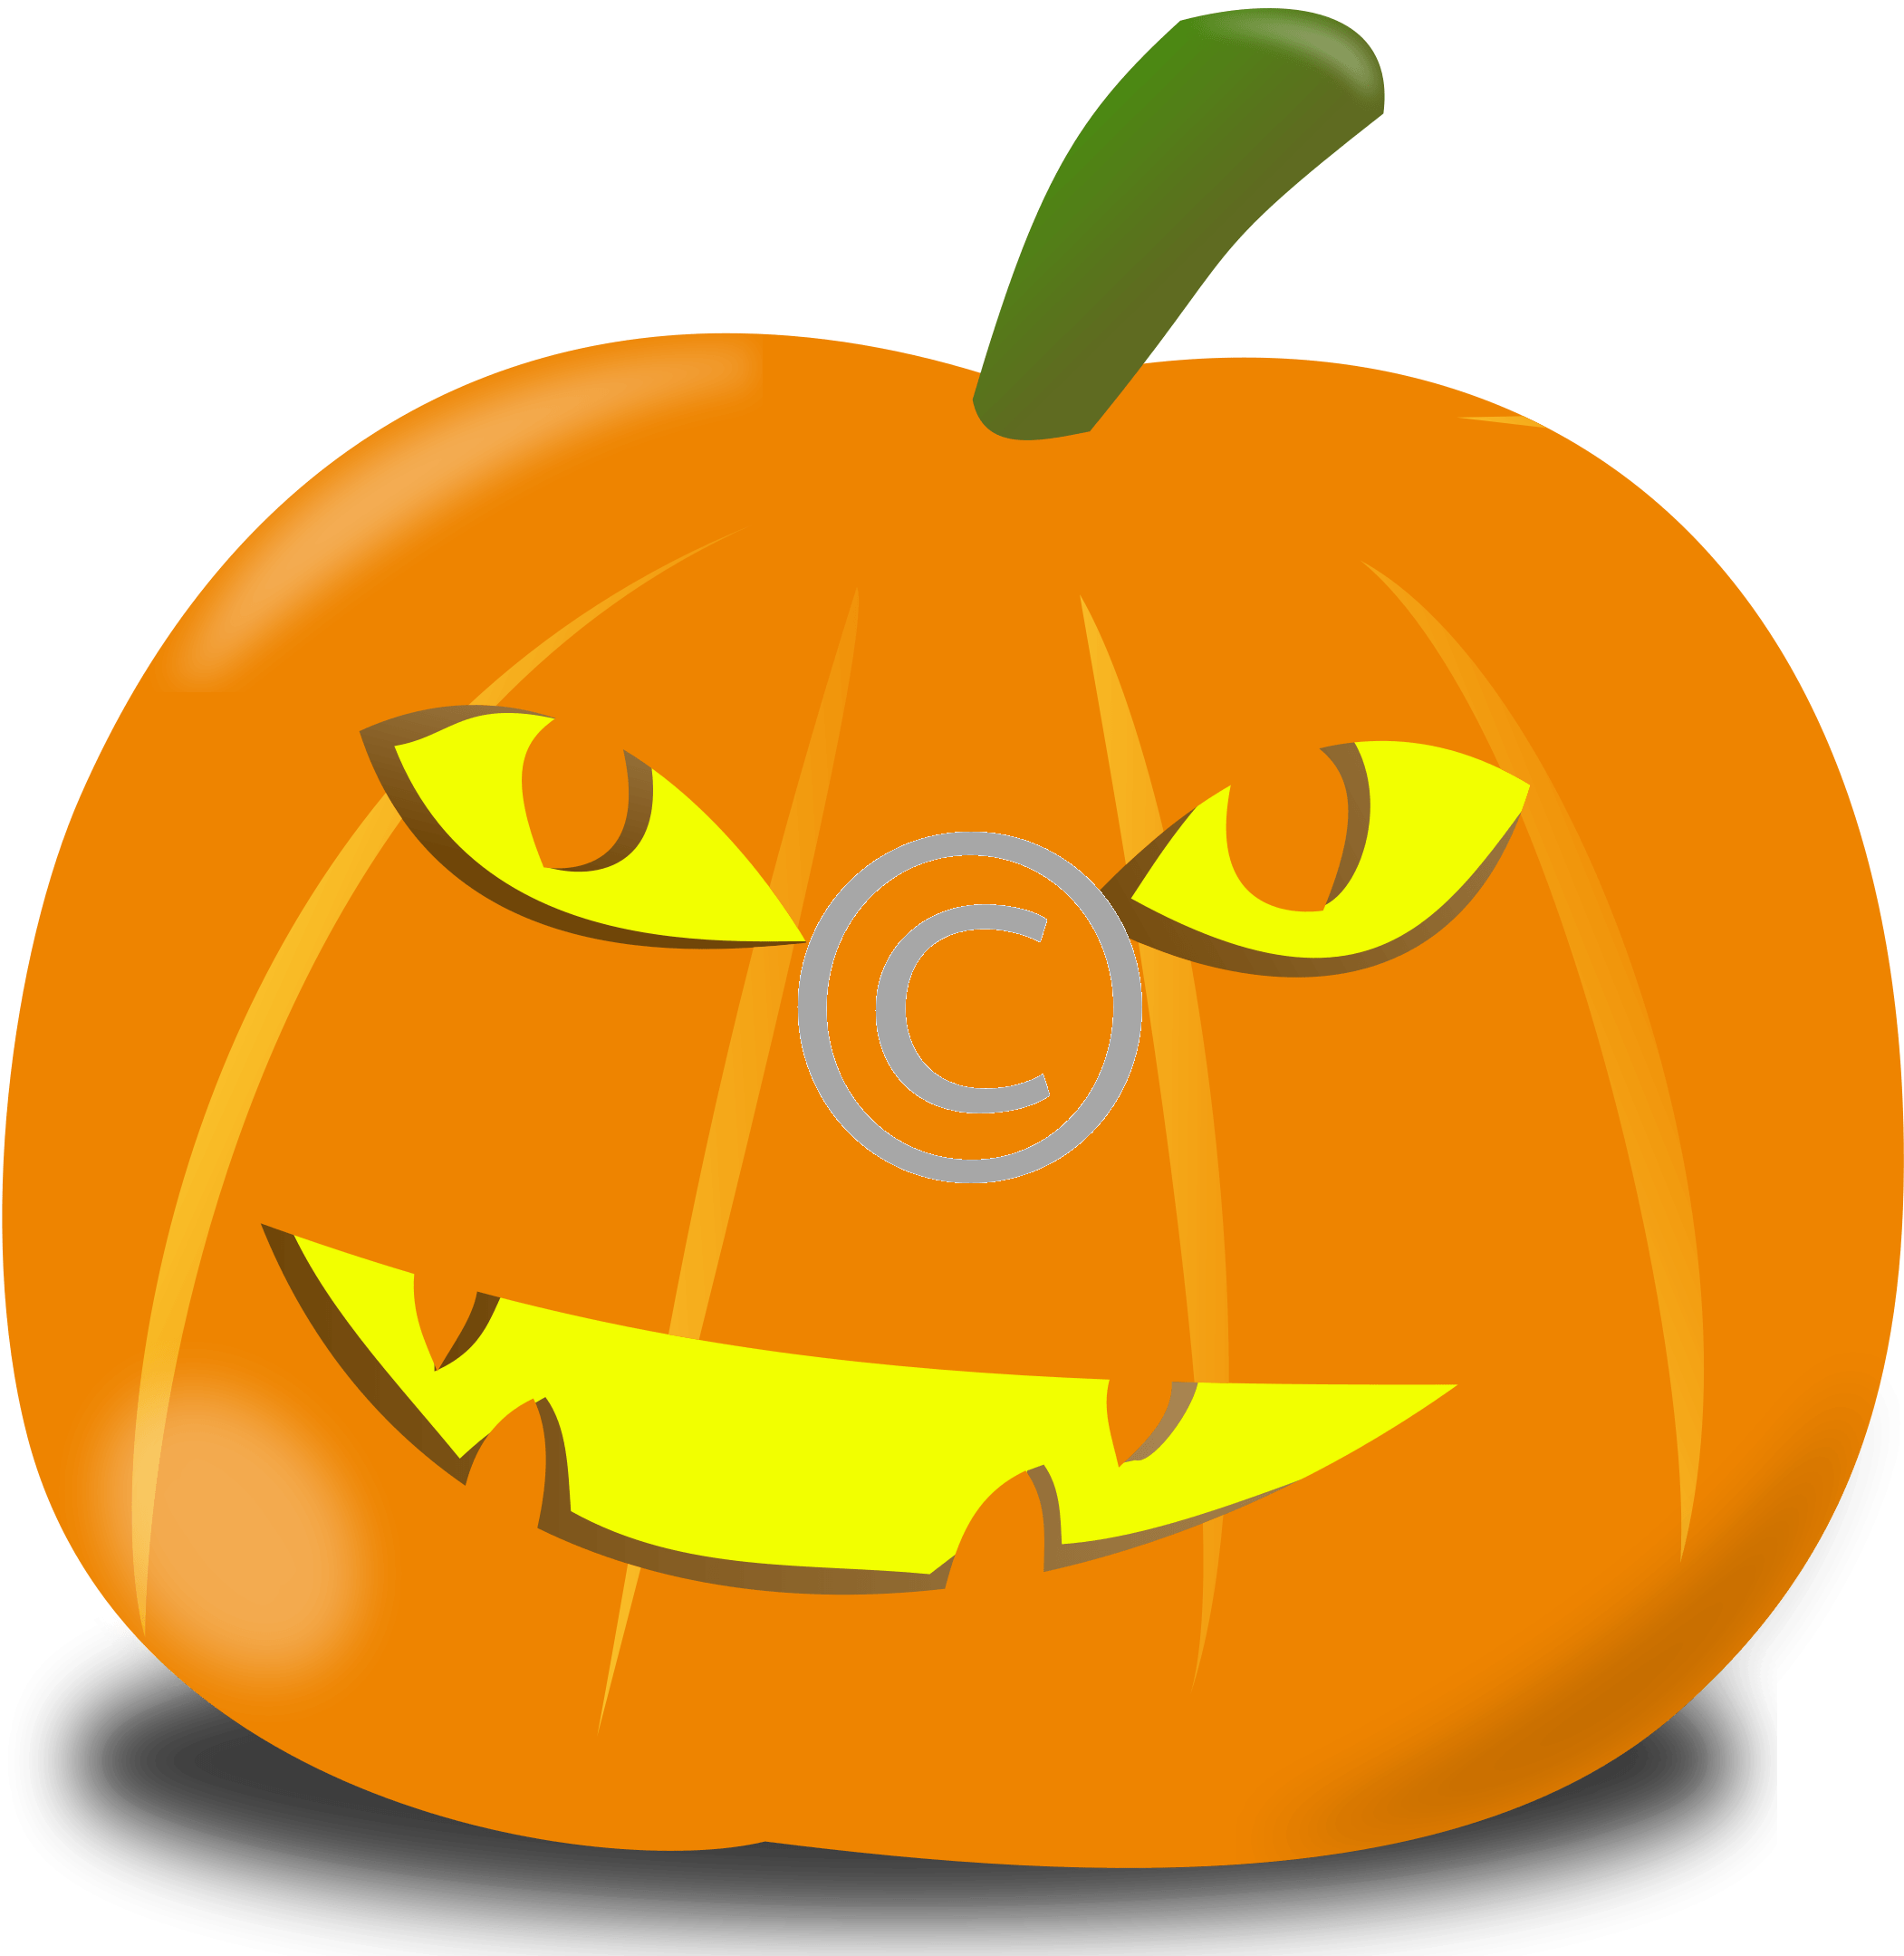 A Pumpkin With A Copyright Symbol